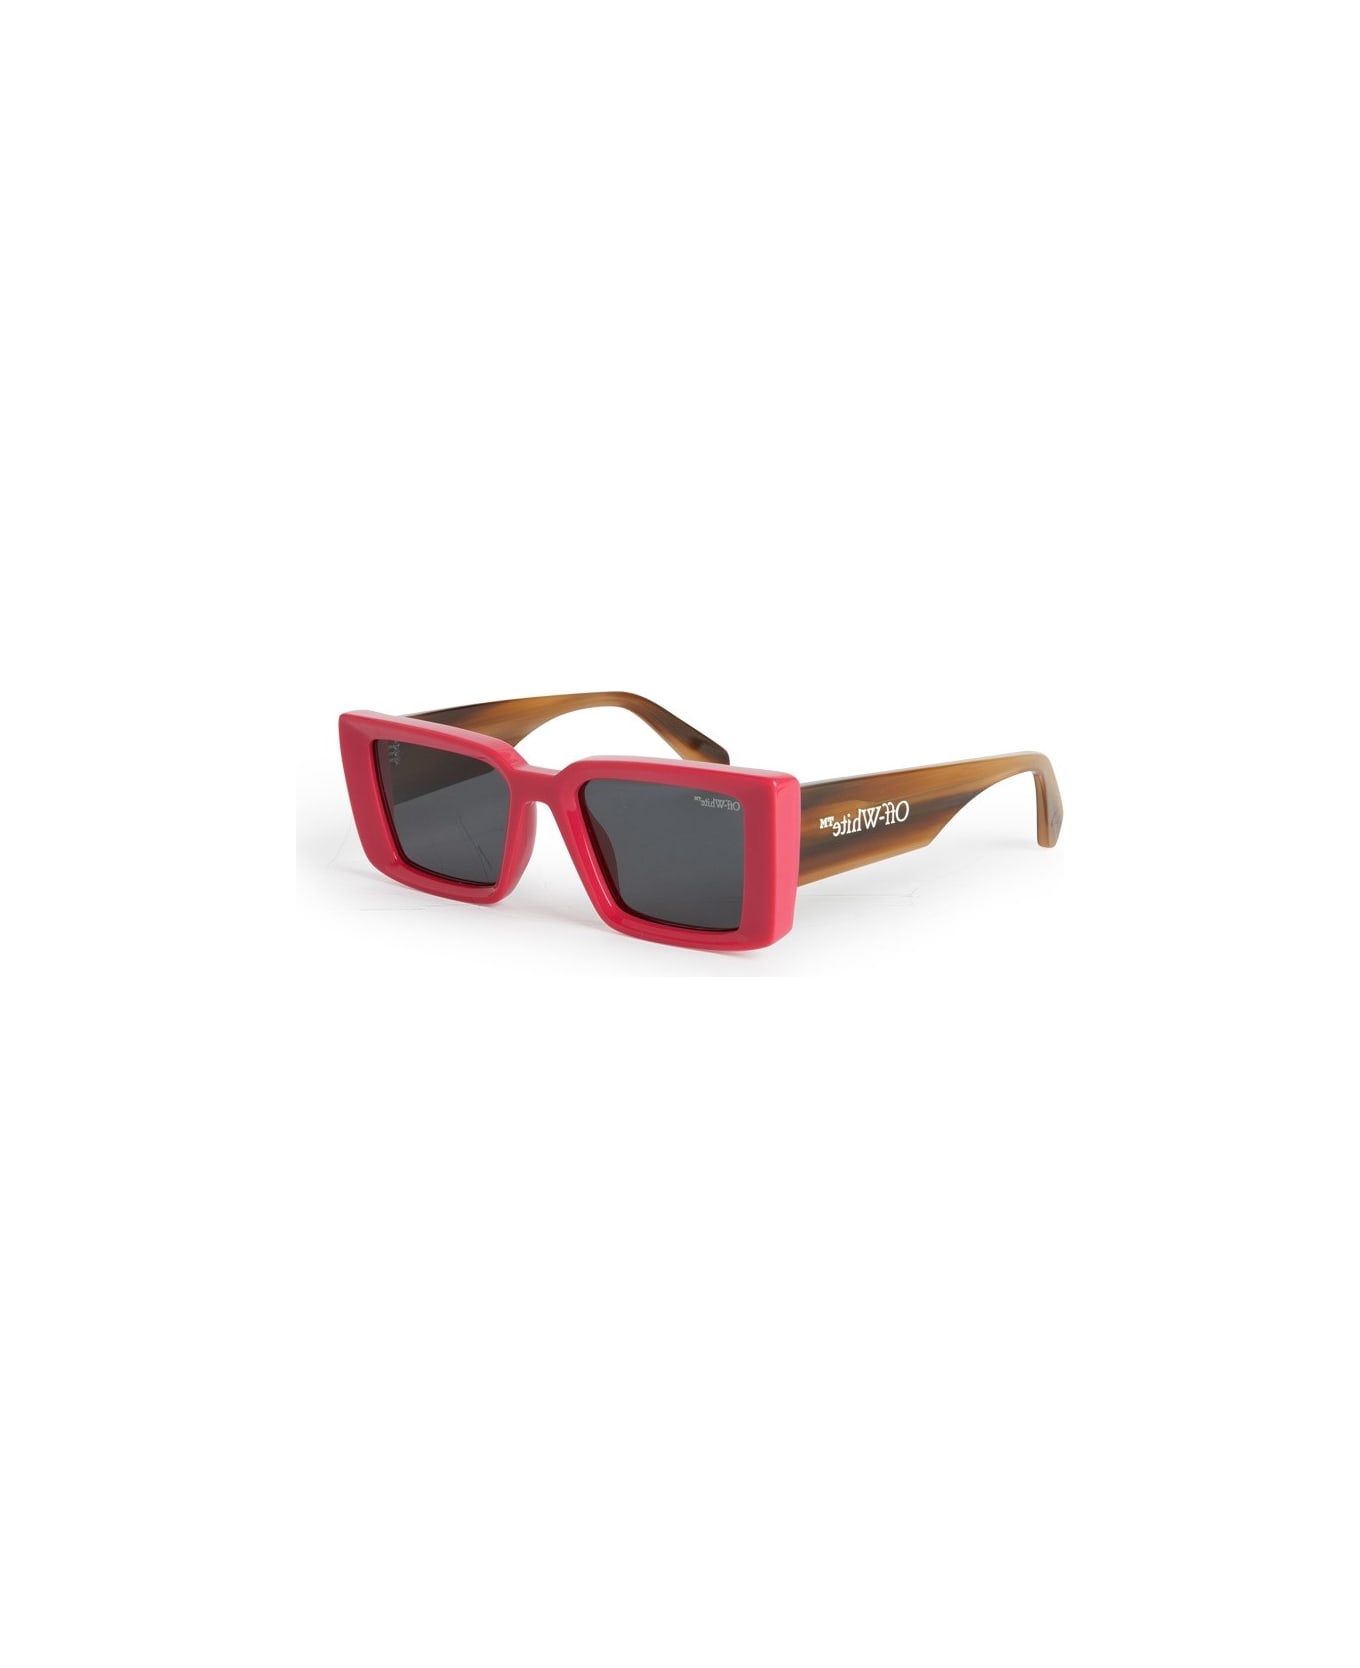 Off-White SAVANNAH SUNGLASSES Sunglasses - Cherry